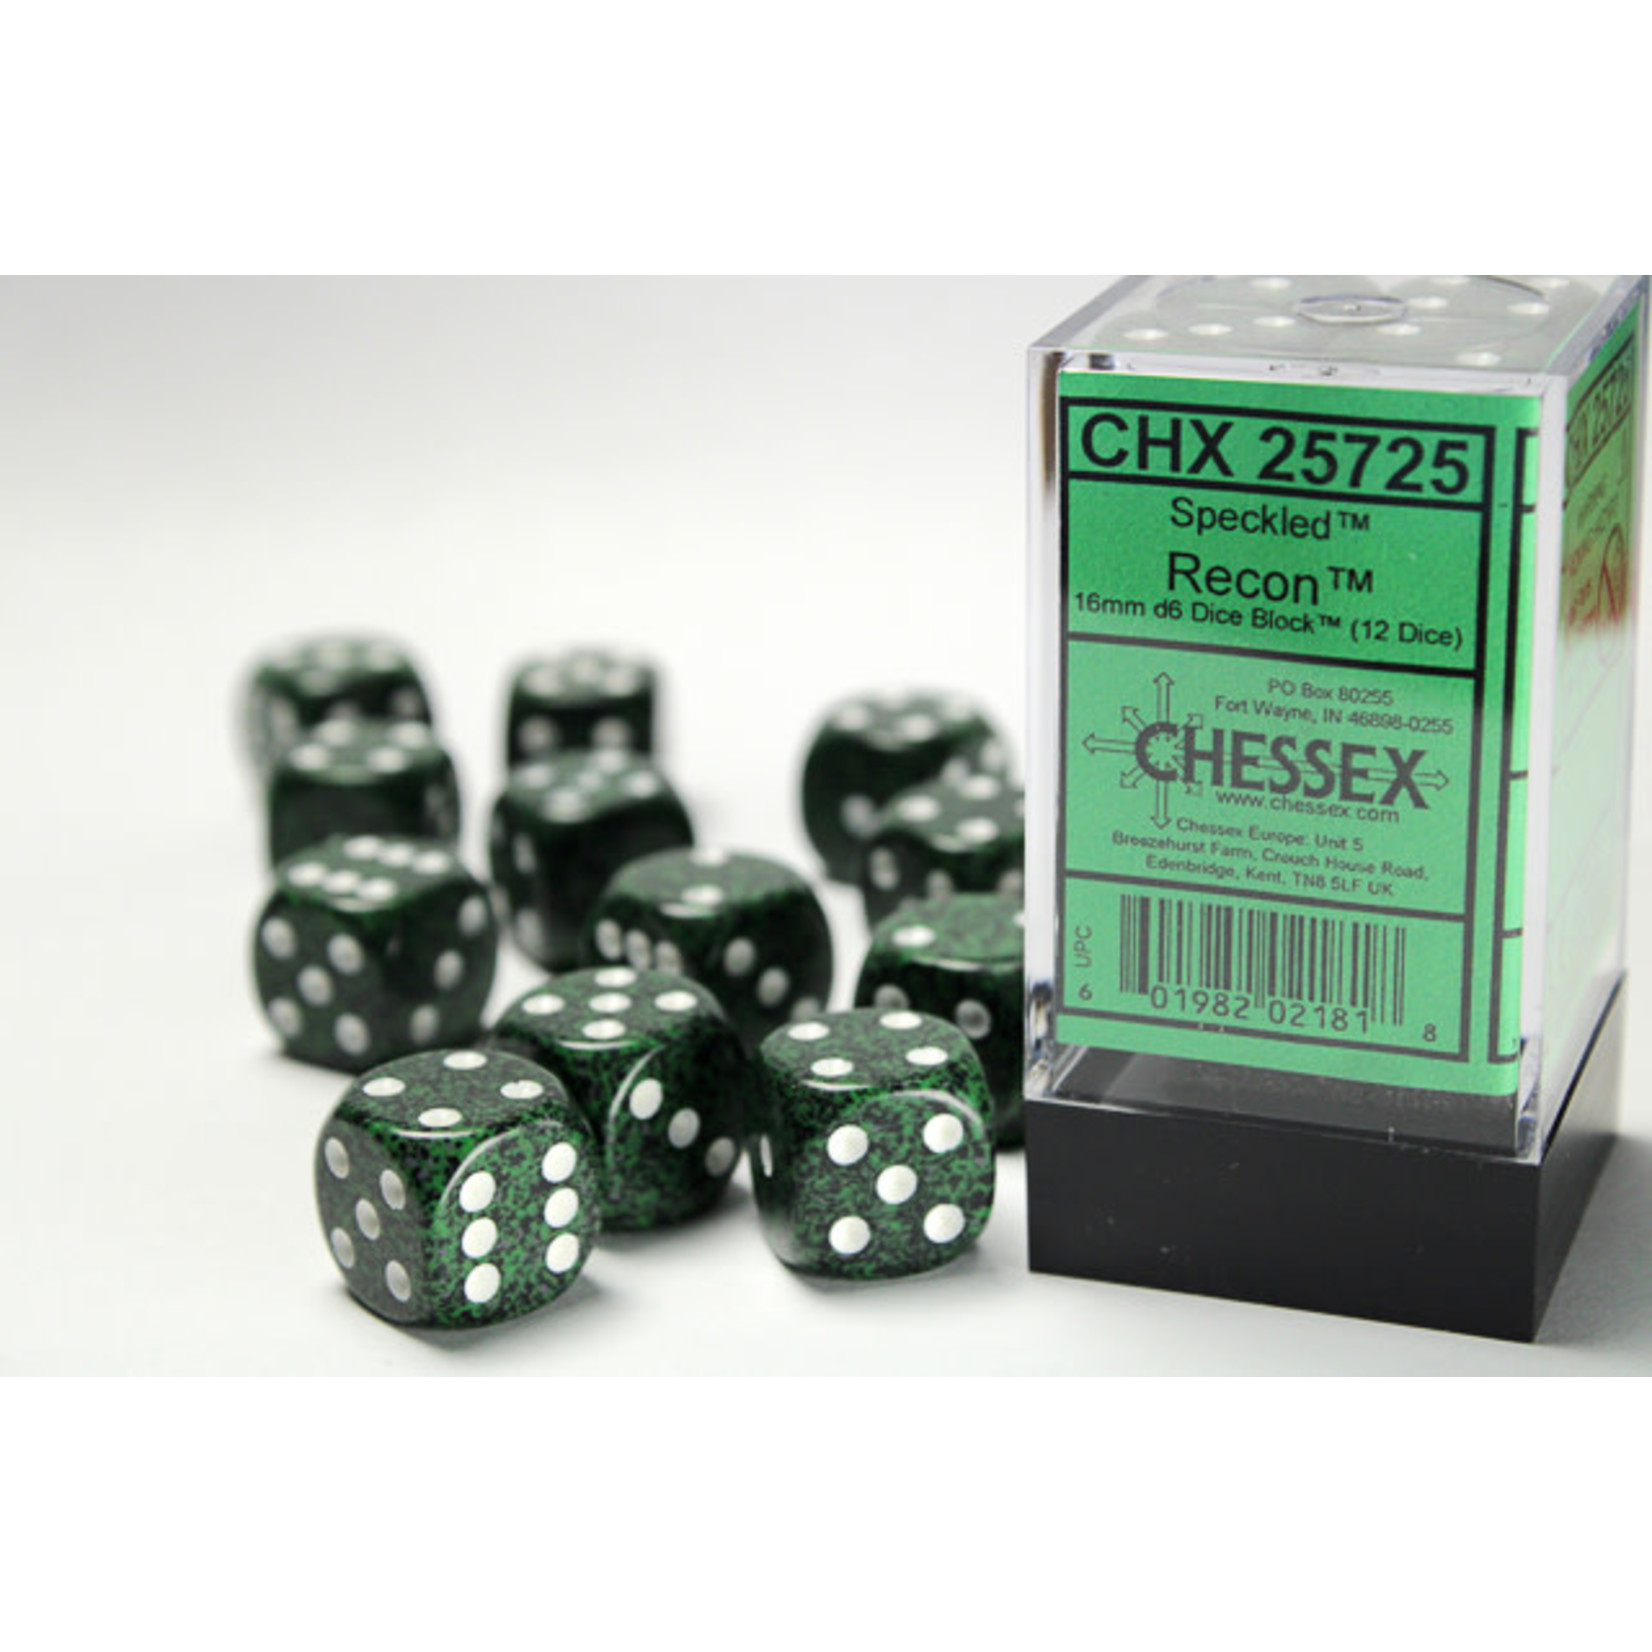 Chessex 25725 Speckled 12pc Recon Dice